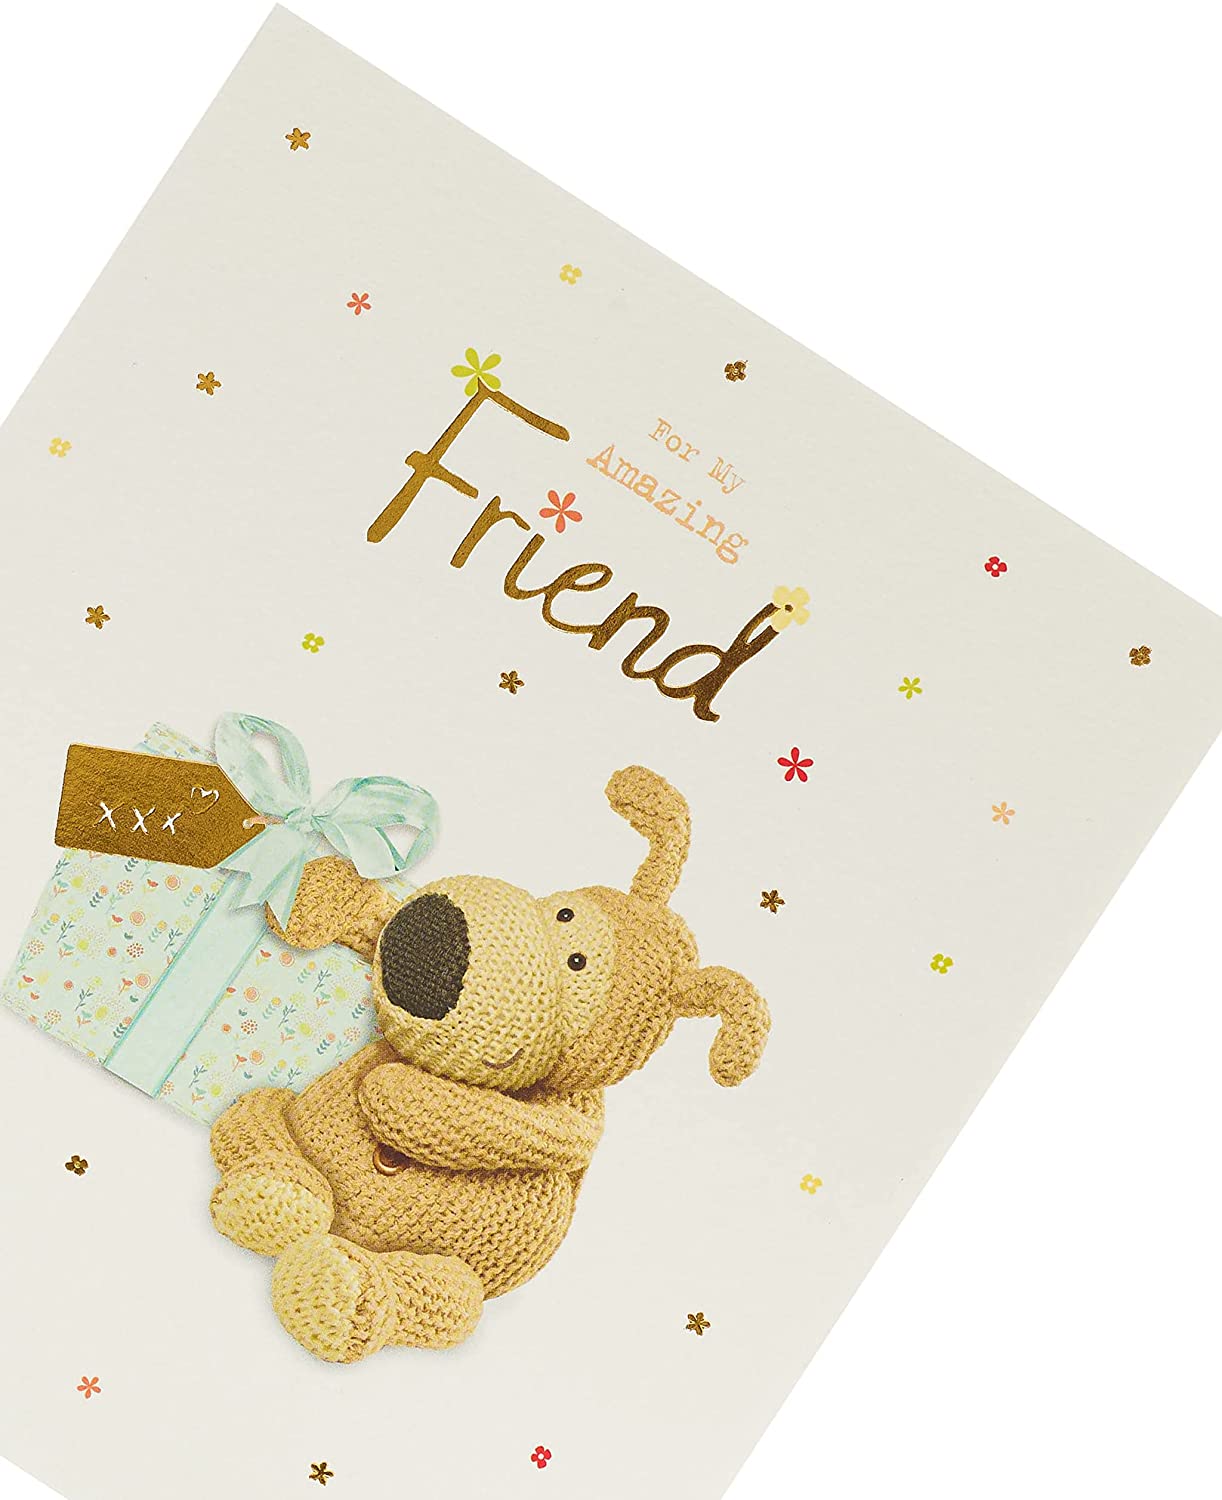 Cute Boofle Card For My Amazing Friend Birthday Card